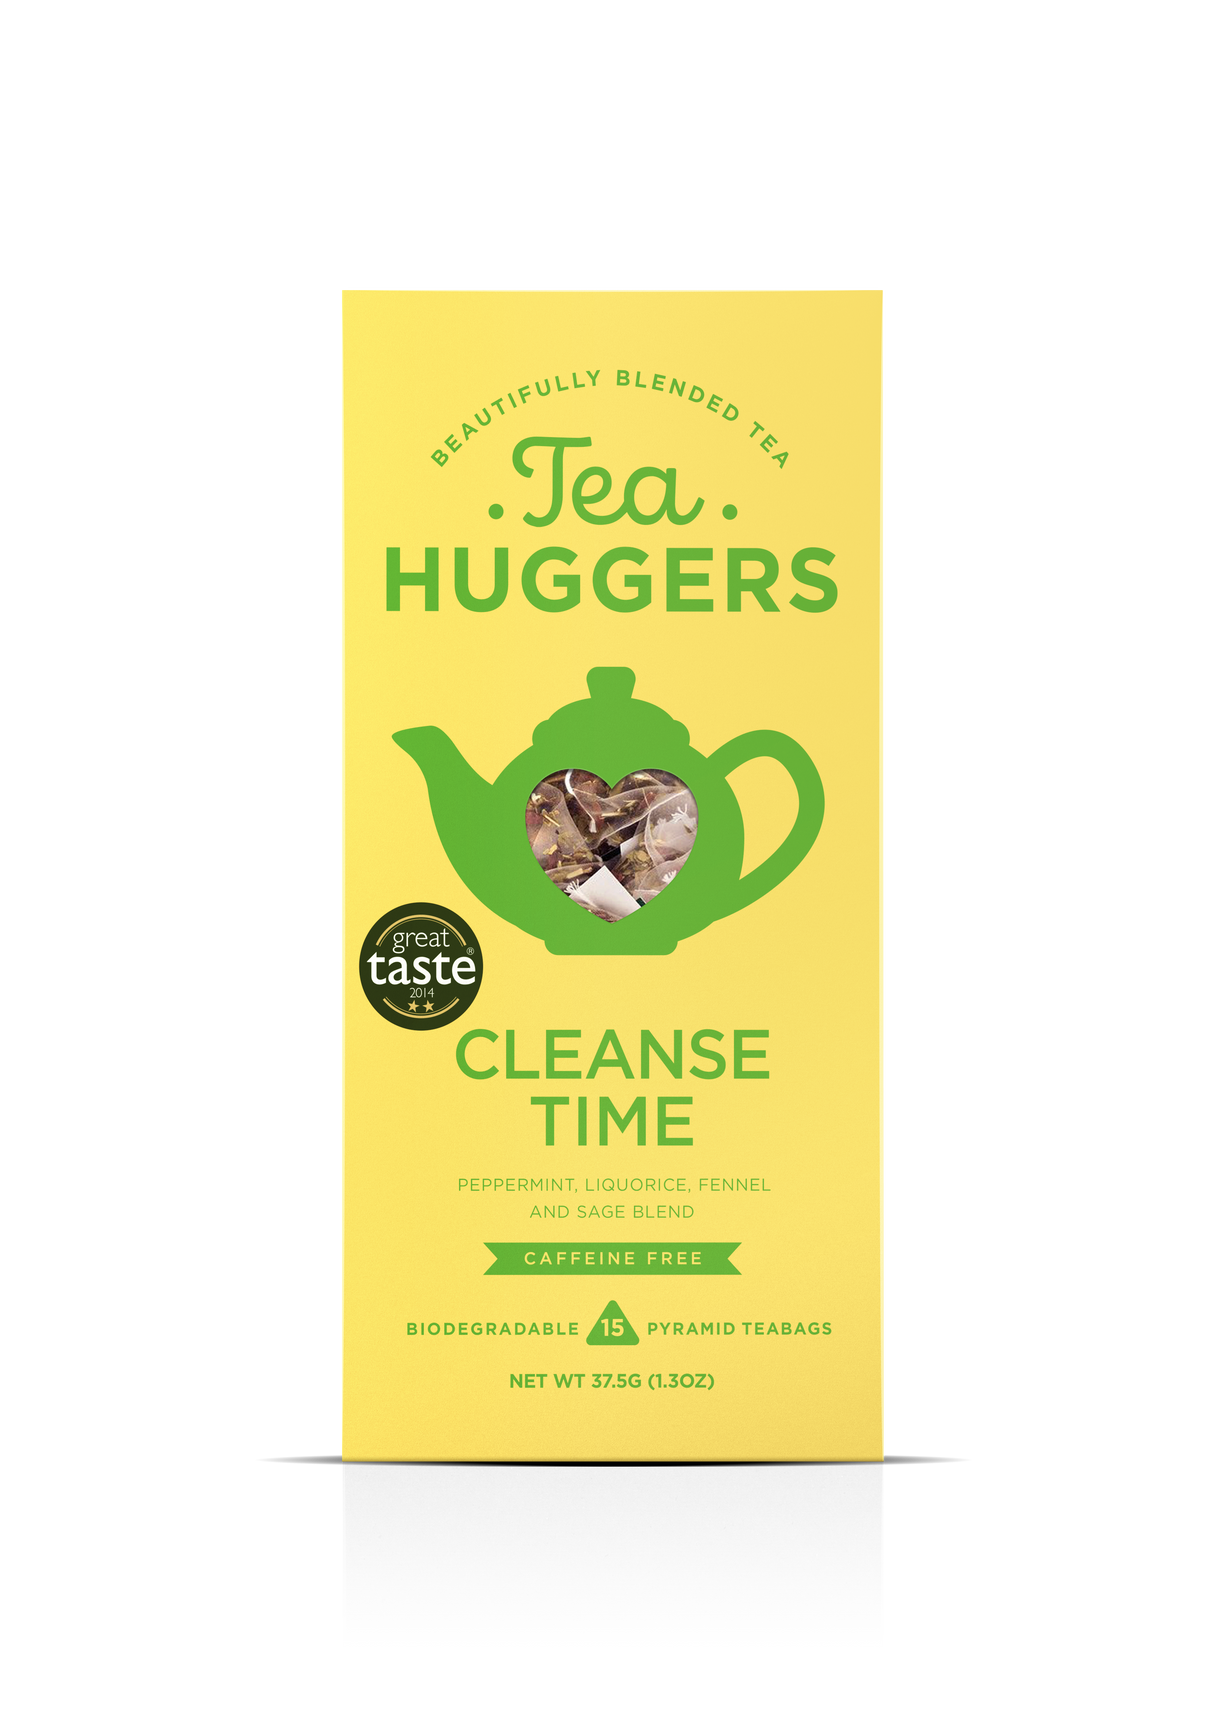 Tea Huggers Cleanse Time (Detox blend) Tea Bags